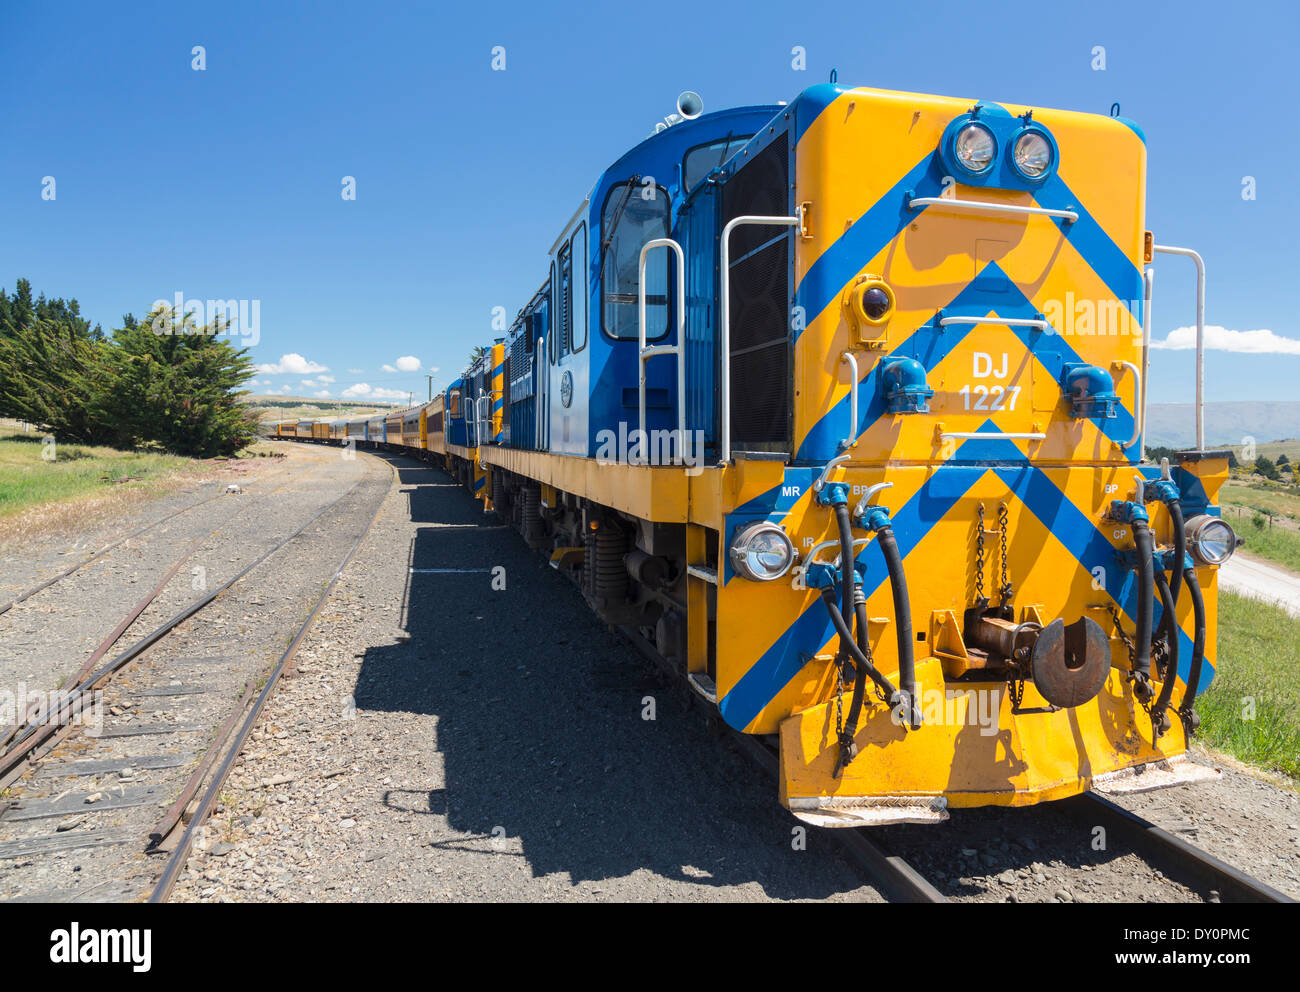 Taieri Gorge convoglio ferroviario, Nuova Zelanda - un diesel elettrico classe DJ locomotore Foto Stock